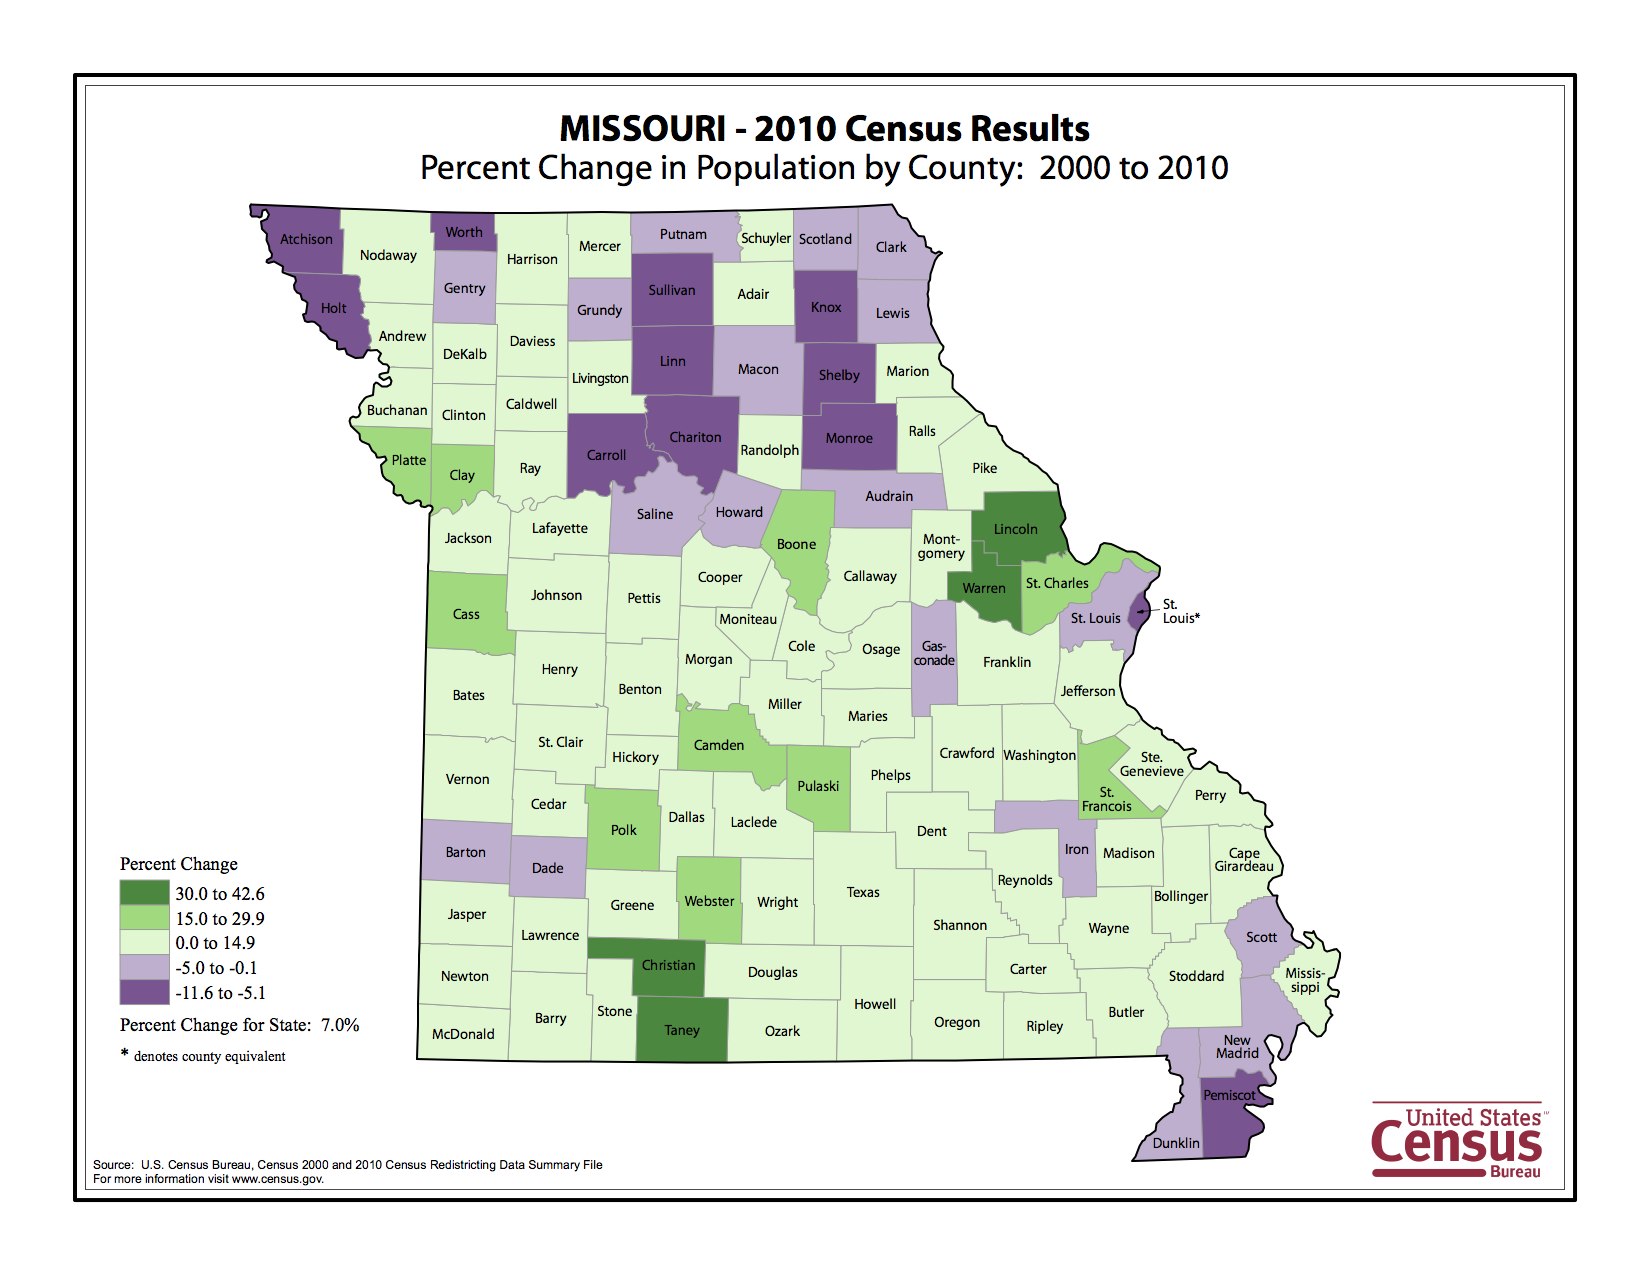 Population Growth in Missouri’s Suburbs and Exurbs « MoGreenStats